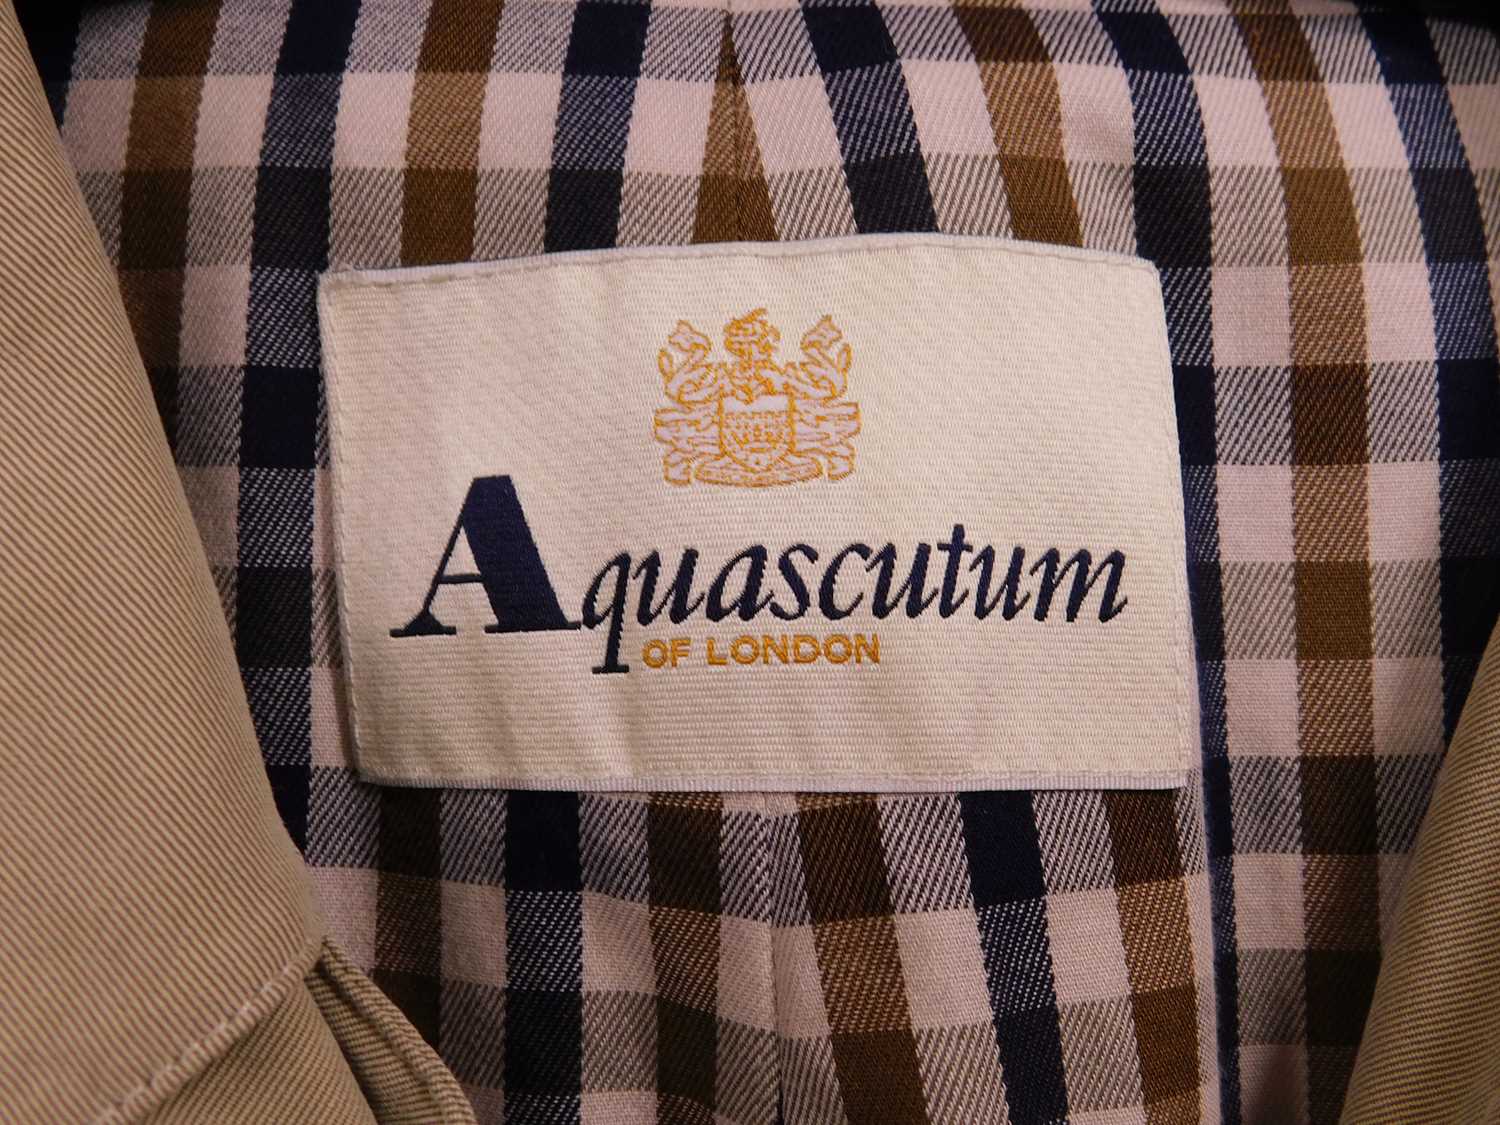 A gentleman's Aquascutum single breasted raincoat, size 40 Reg - Image 3 of 3